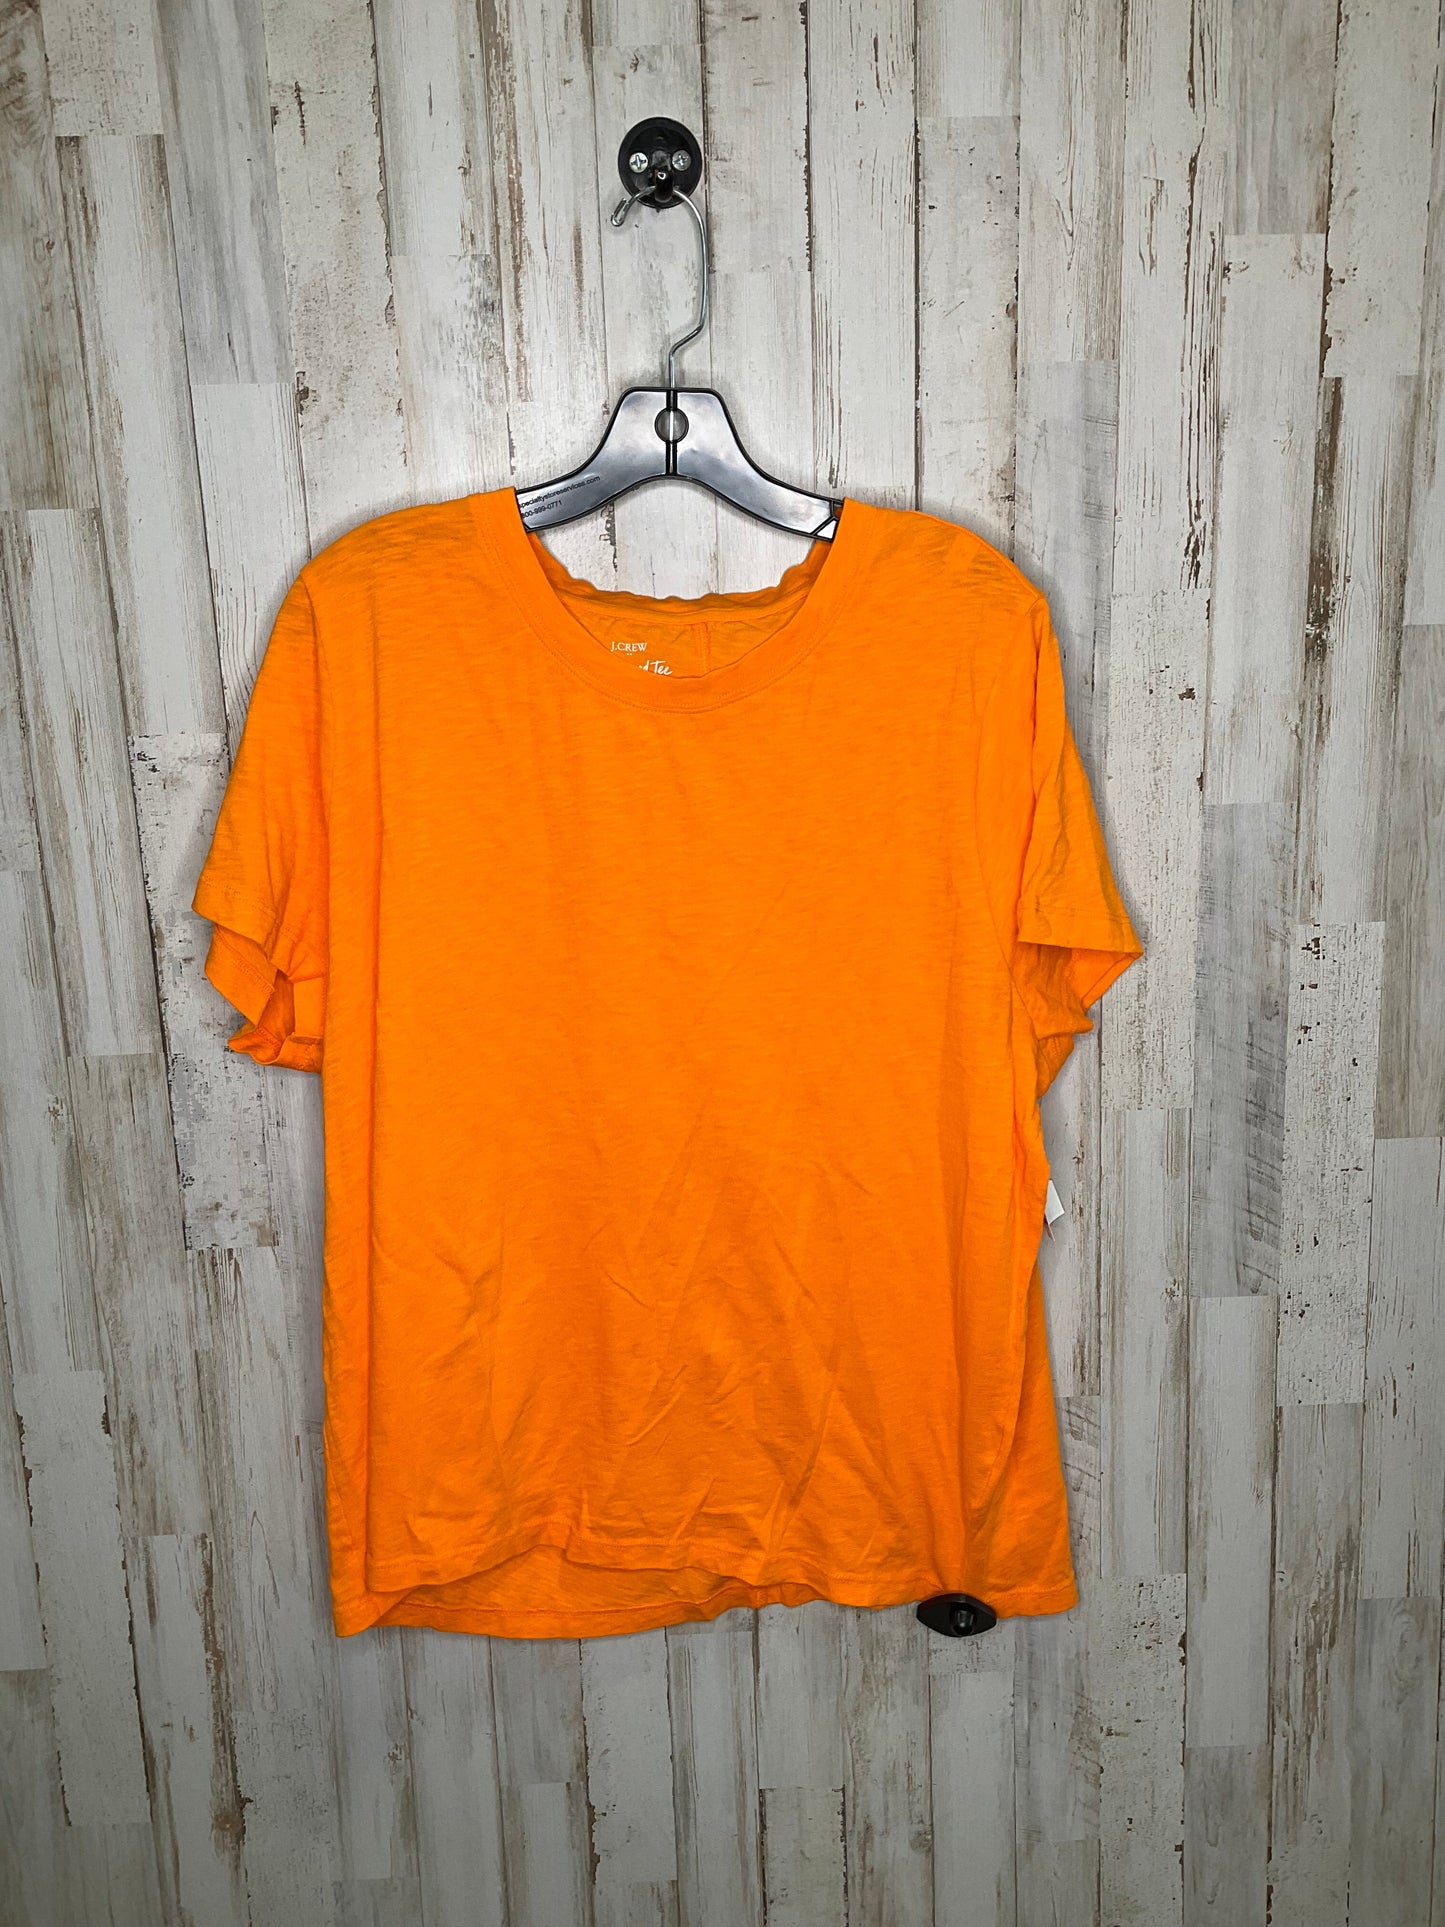 Orange Top Short Sleeve J. Crew, Size 2x